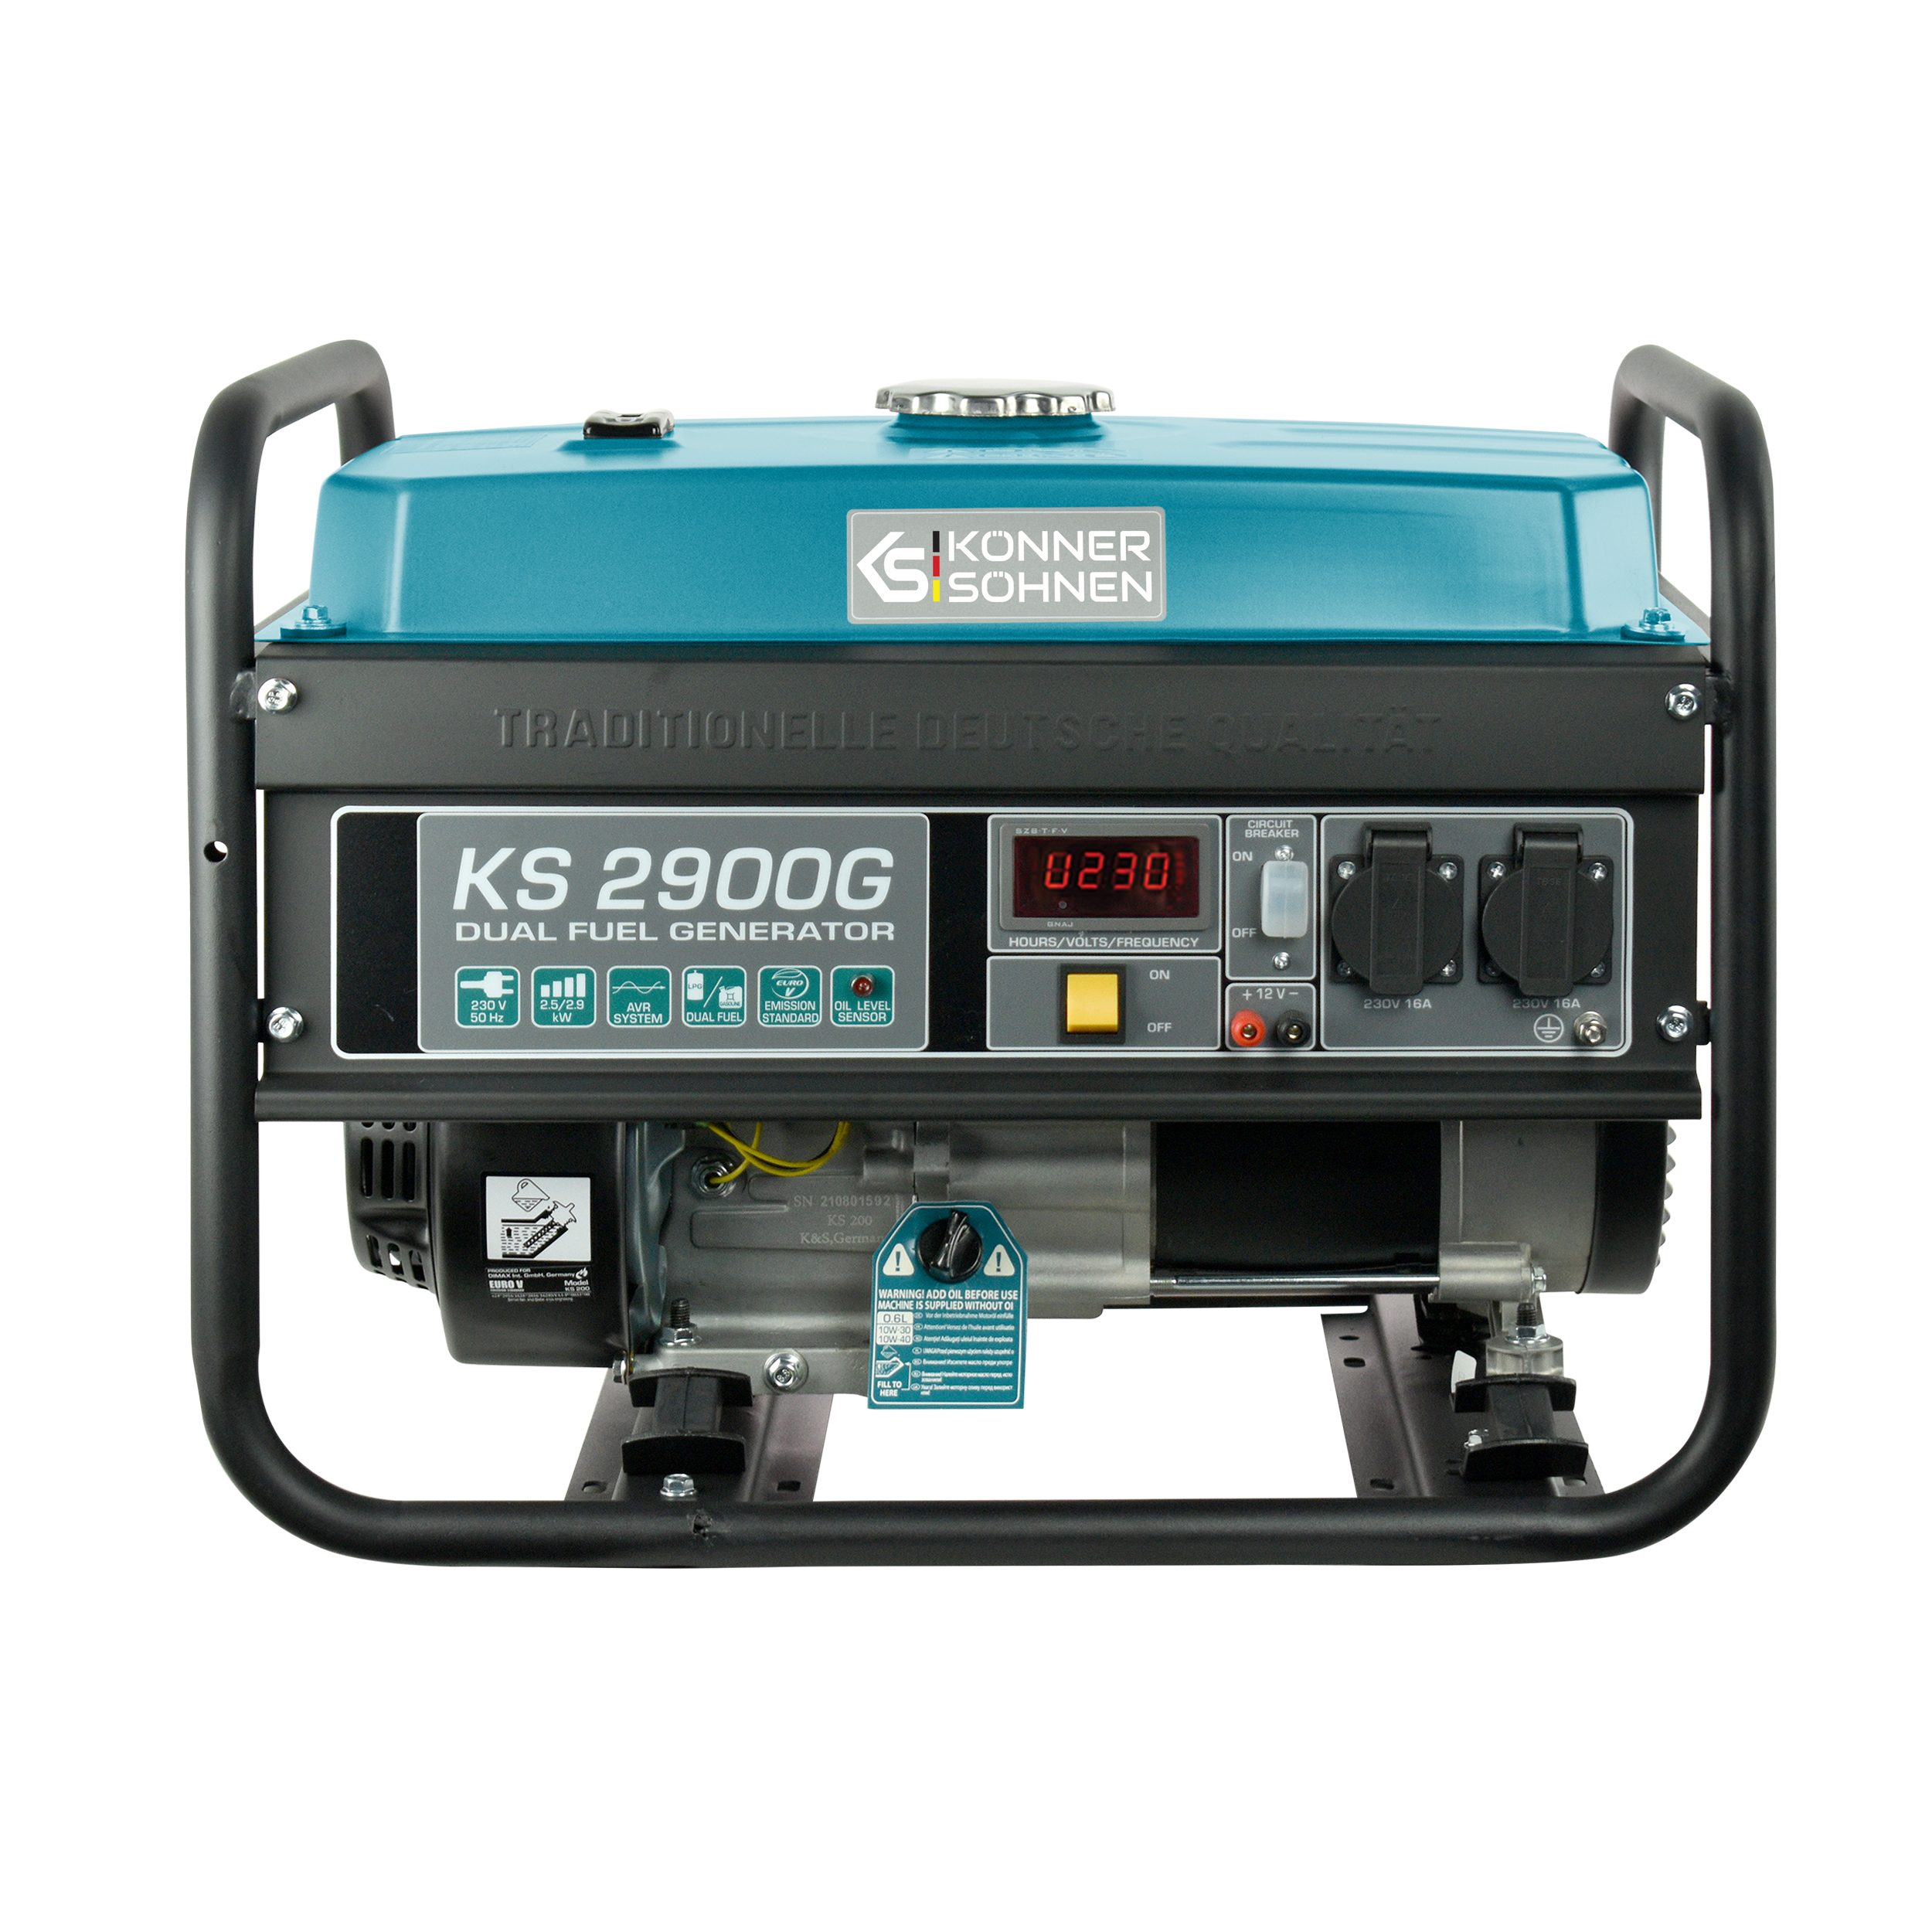 Könner & Söhnen Stromerzeuger KS 2900G, 2,90 in kW, (Packung, 1-tlg), 2x16A (230 V), 12 V, automatischer Spannungsregler (AVR)